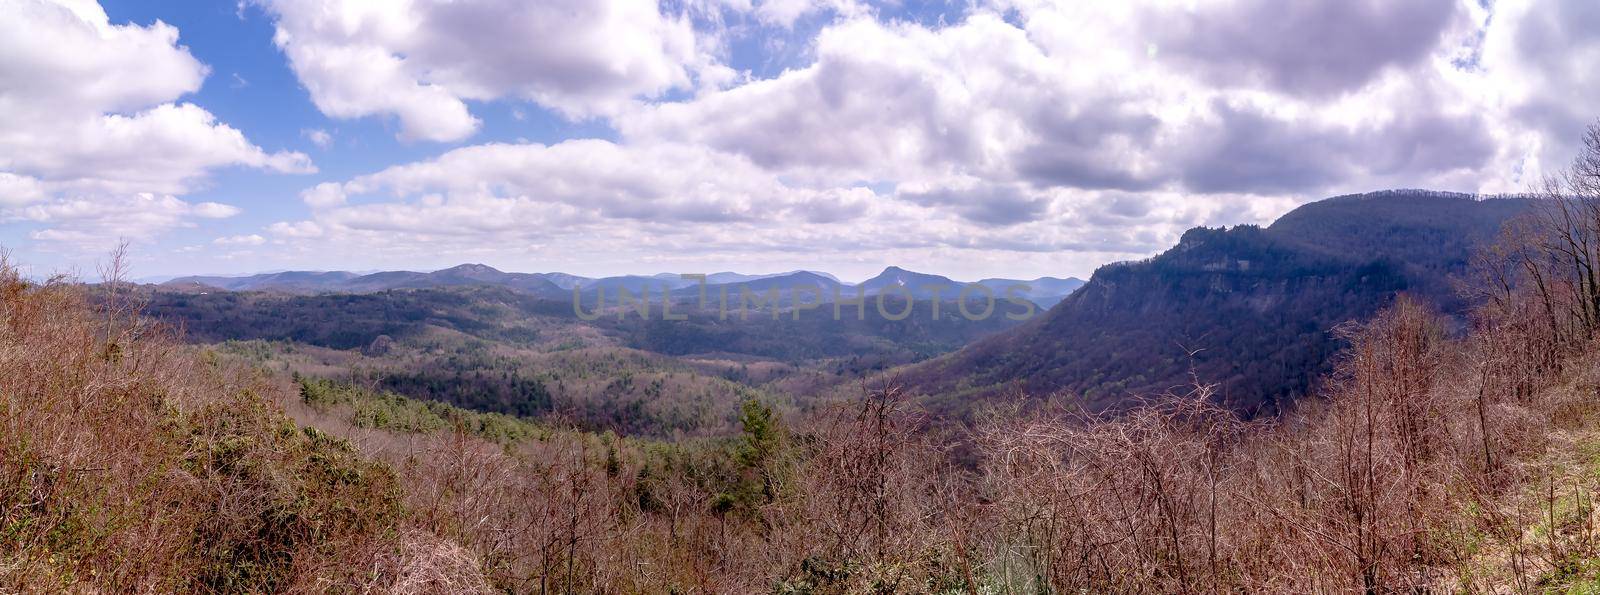 Nantahala national forest scenic mountain ovelook in north carolina by digidreamgrafix